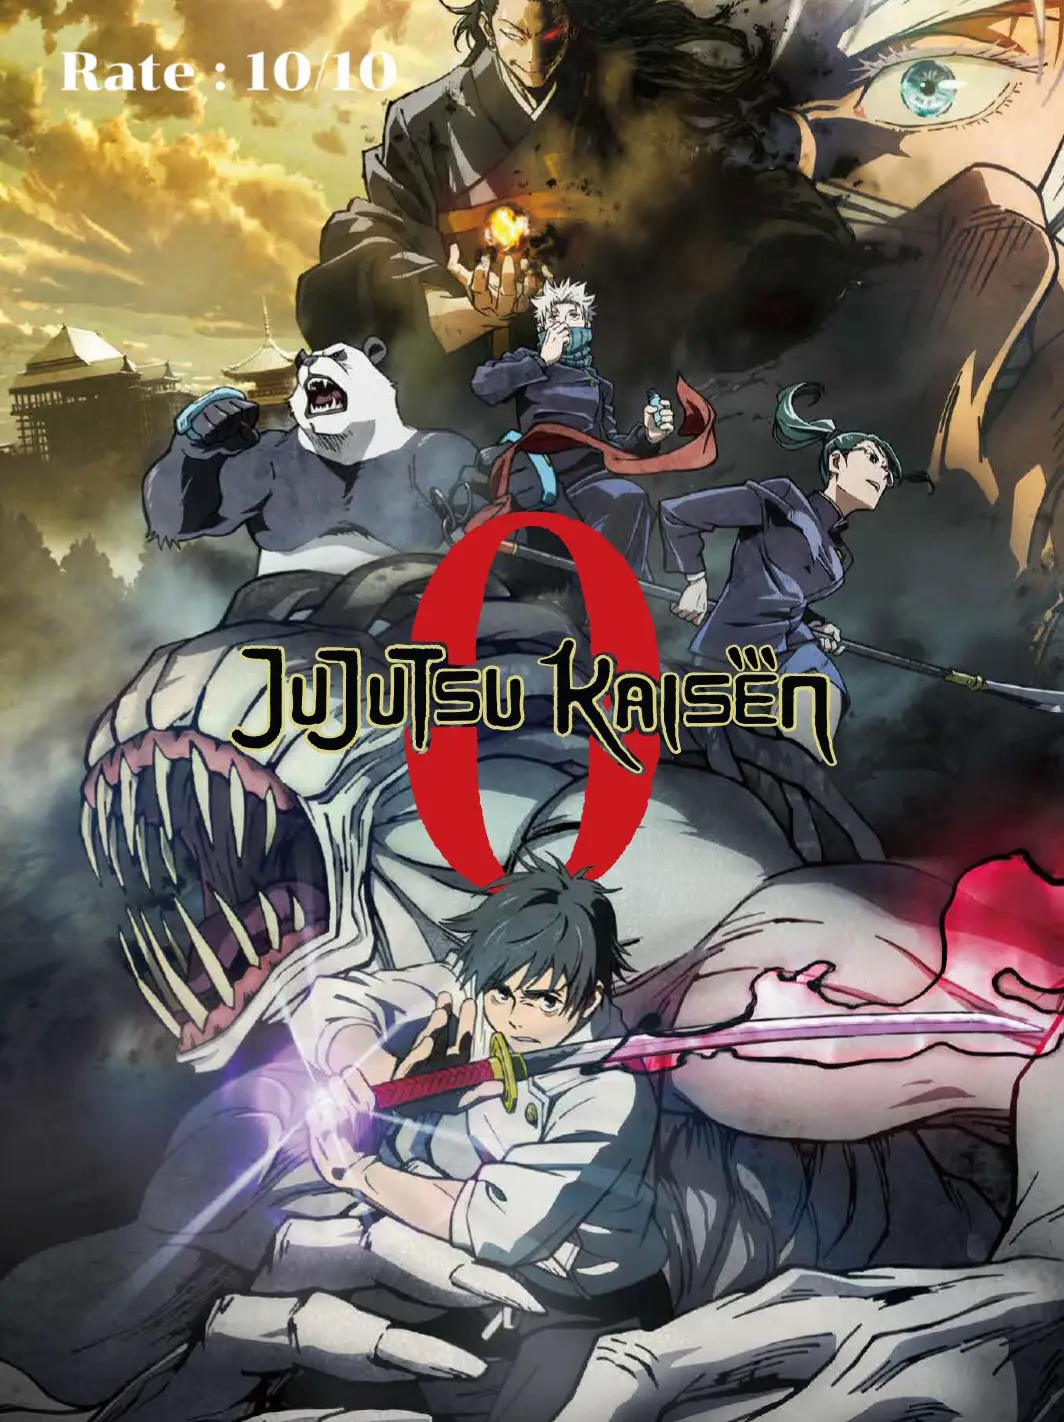 Demon Slayer -Kimetsu no Yaiba- The Movie: Mugen Train Demon Slayer -Kimetsu  no Yaiba- The Movie: Mugen Train - Watch on Crunchyroll